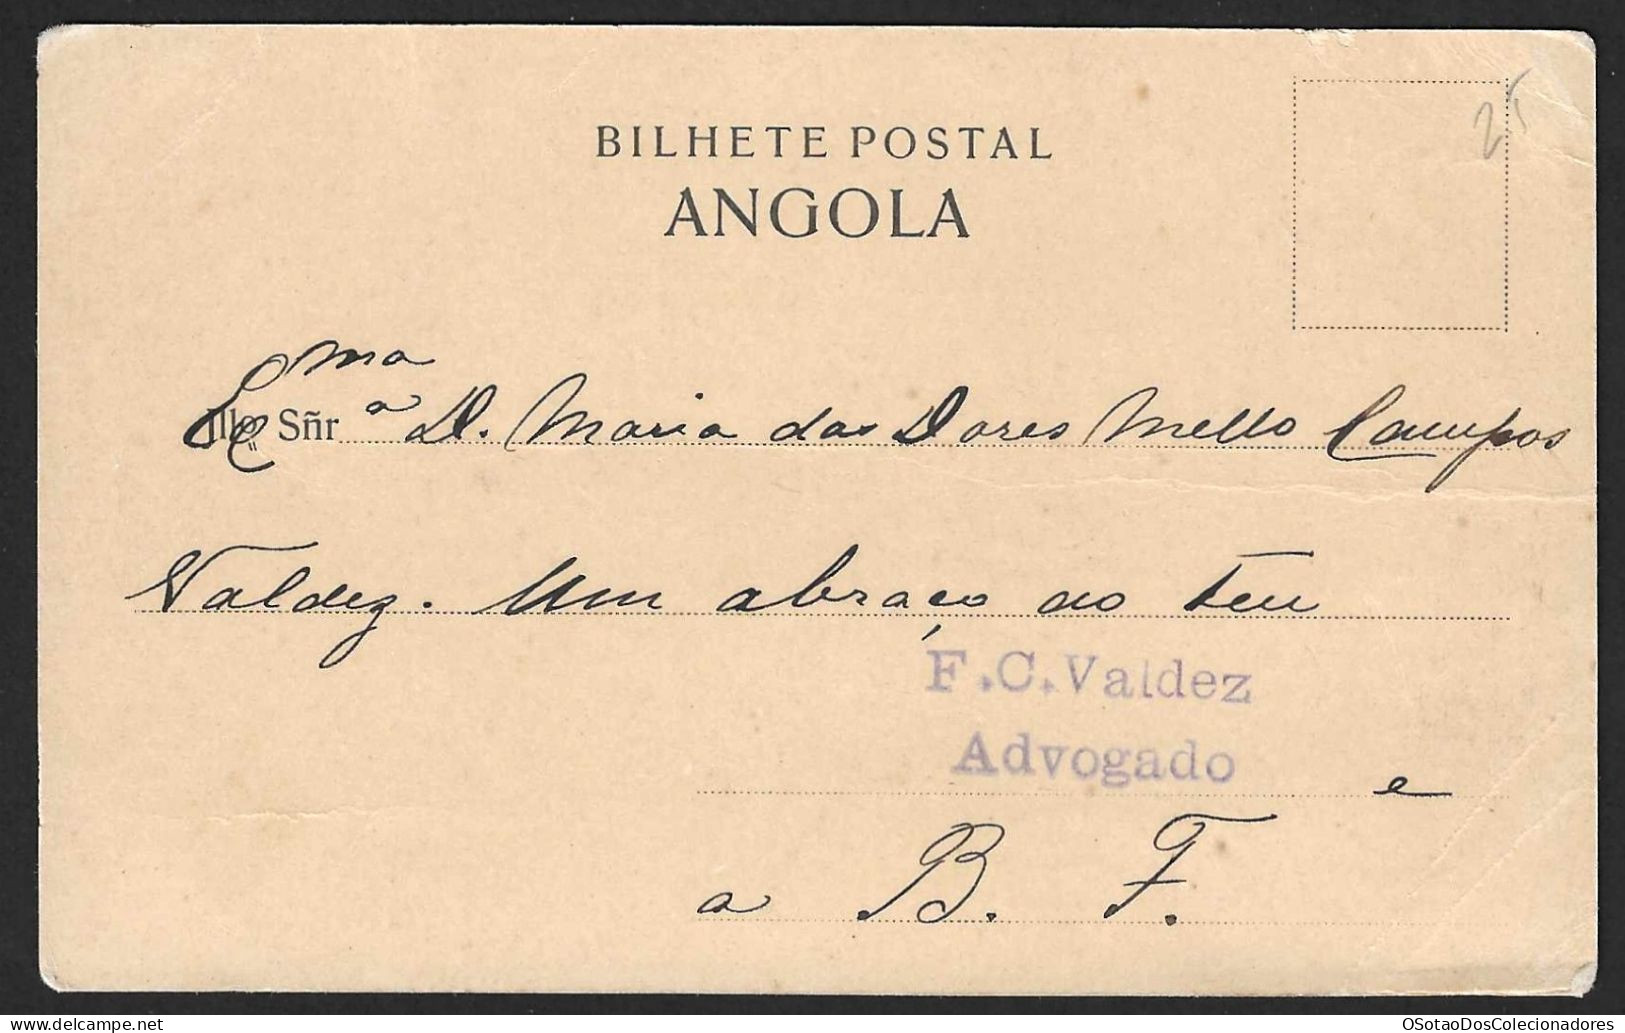 Postal Angola - Luanda - Palácio Do Governador - Ed. Osorio, Delgado E Bandeira - Angola